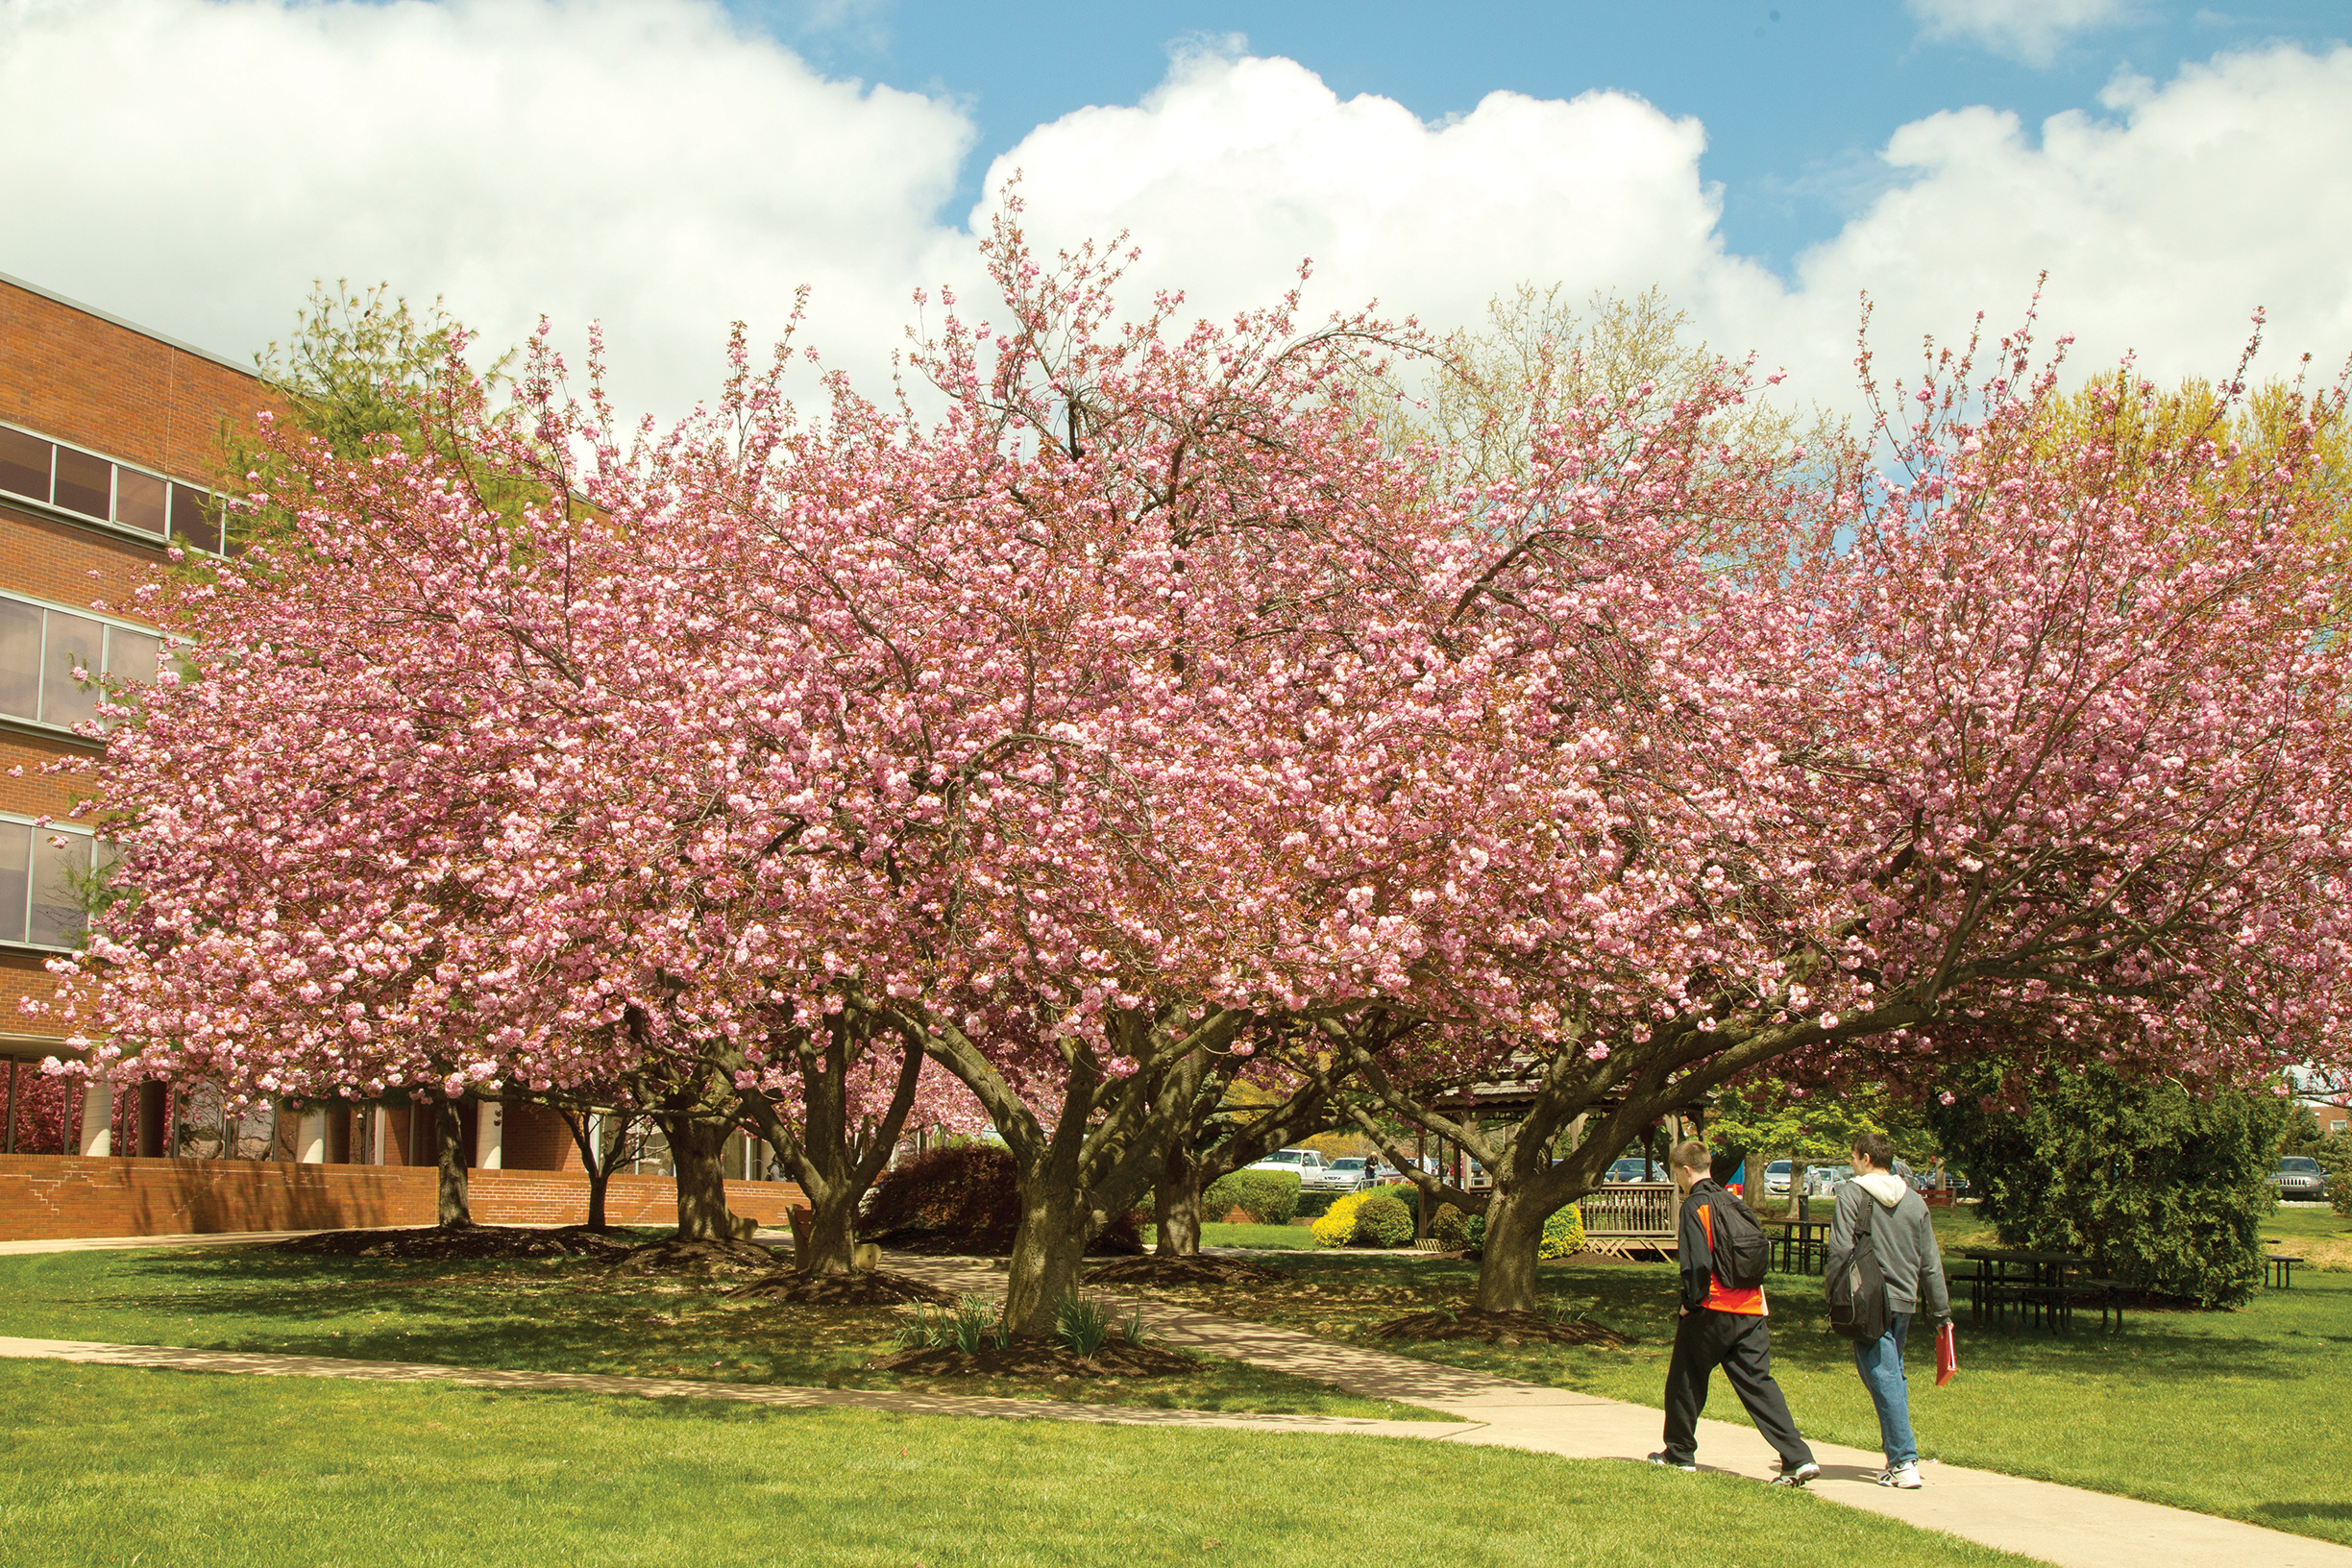 Students walking under trees in bloom